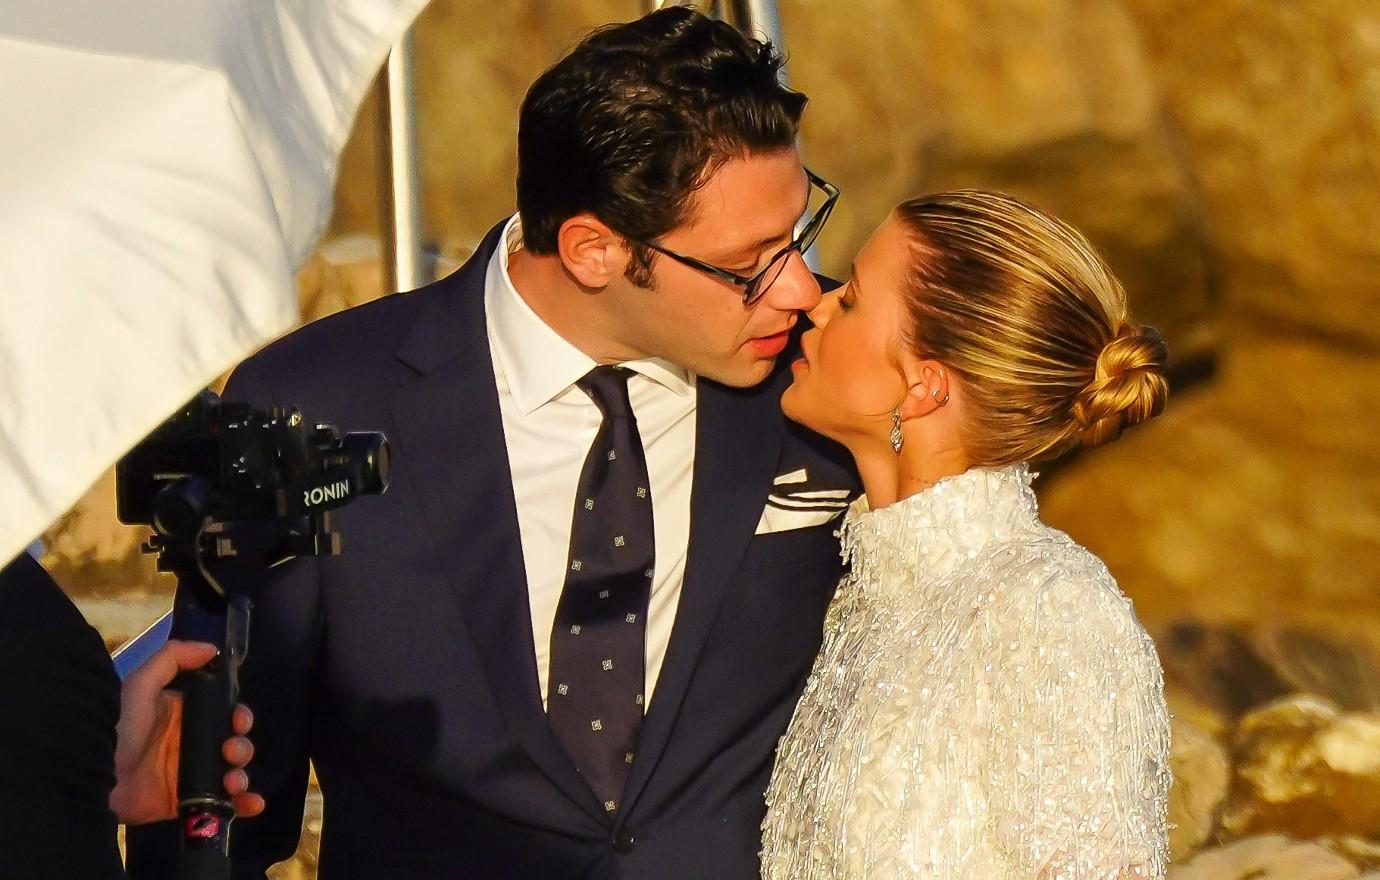 Sofia Richie Marries Elliot Grainge in France: See the Wedding